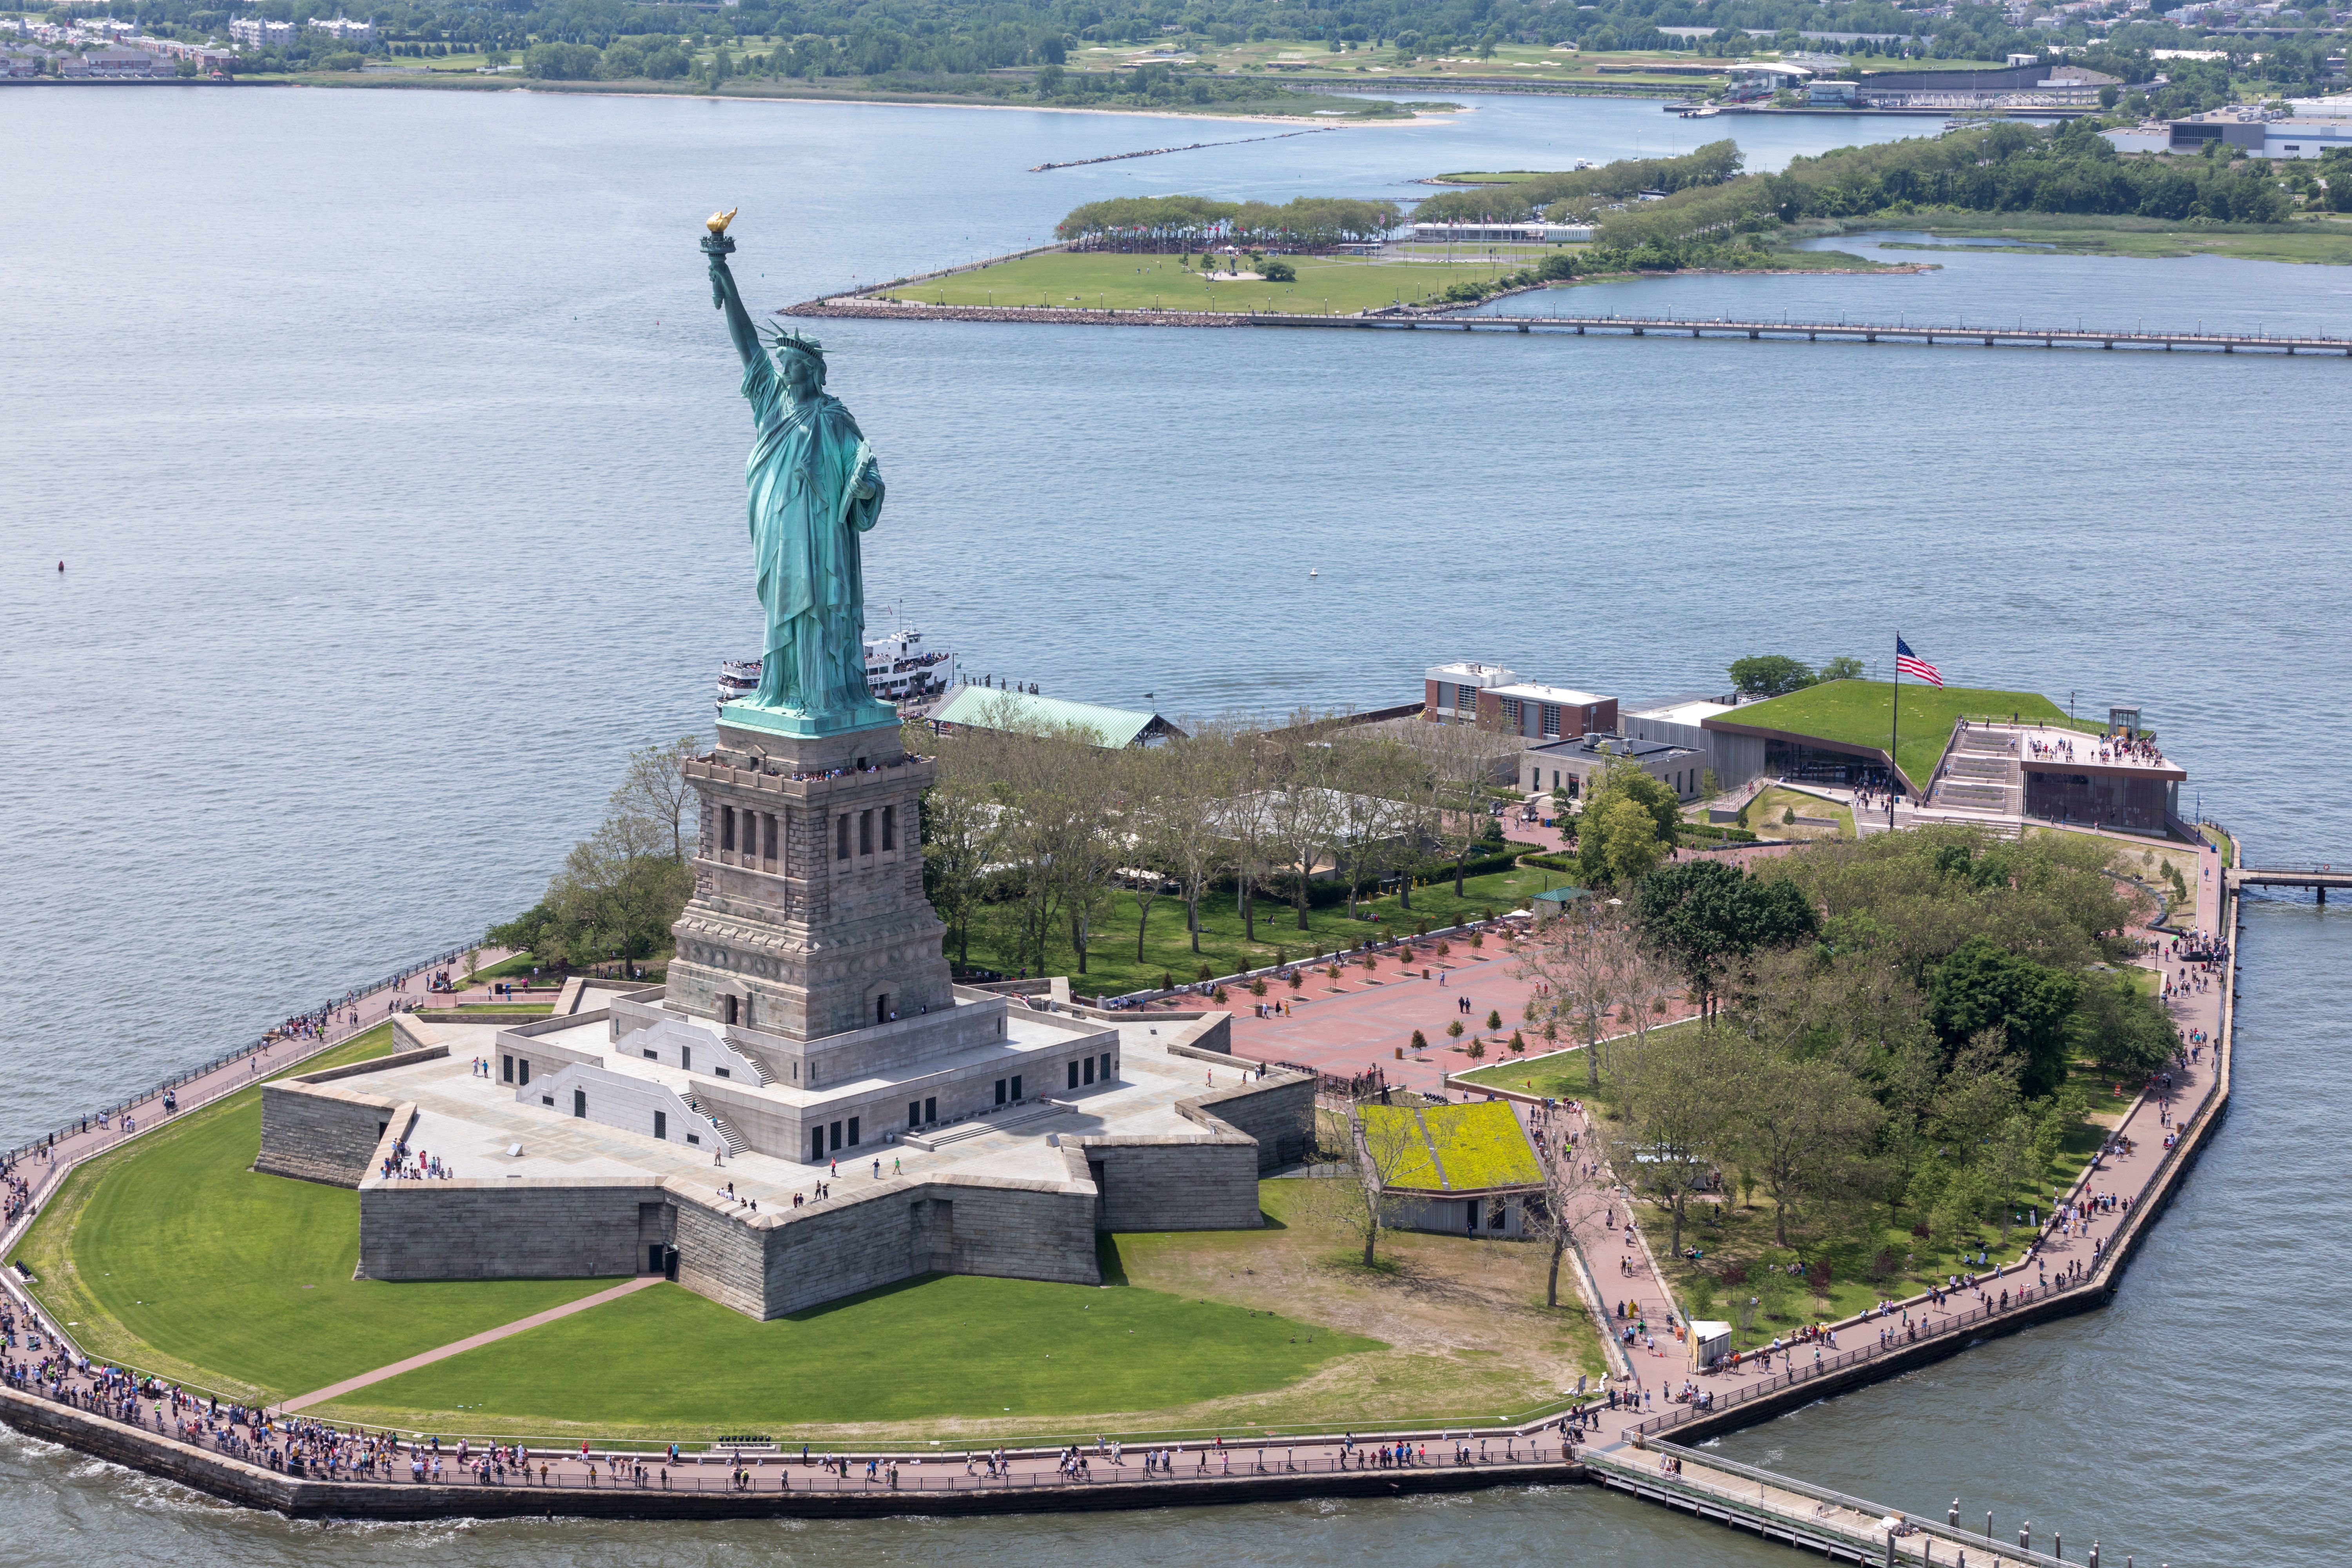 The Statue of Liberty on Liberty Island, New Jersey